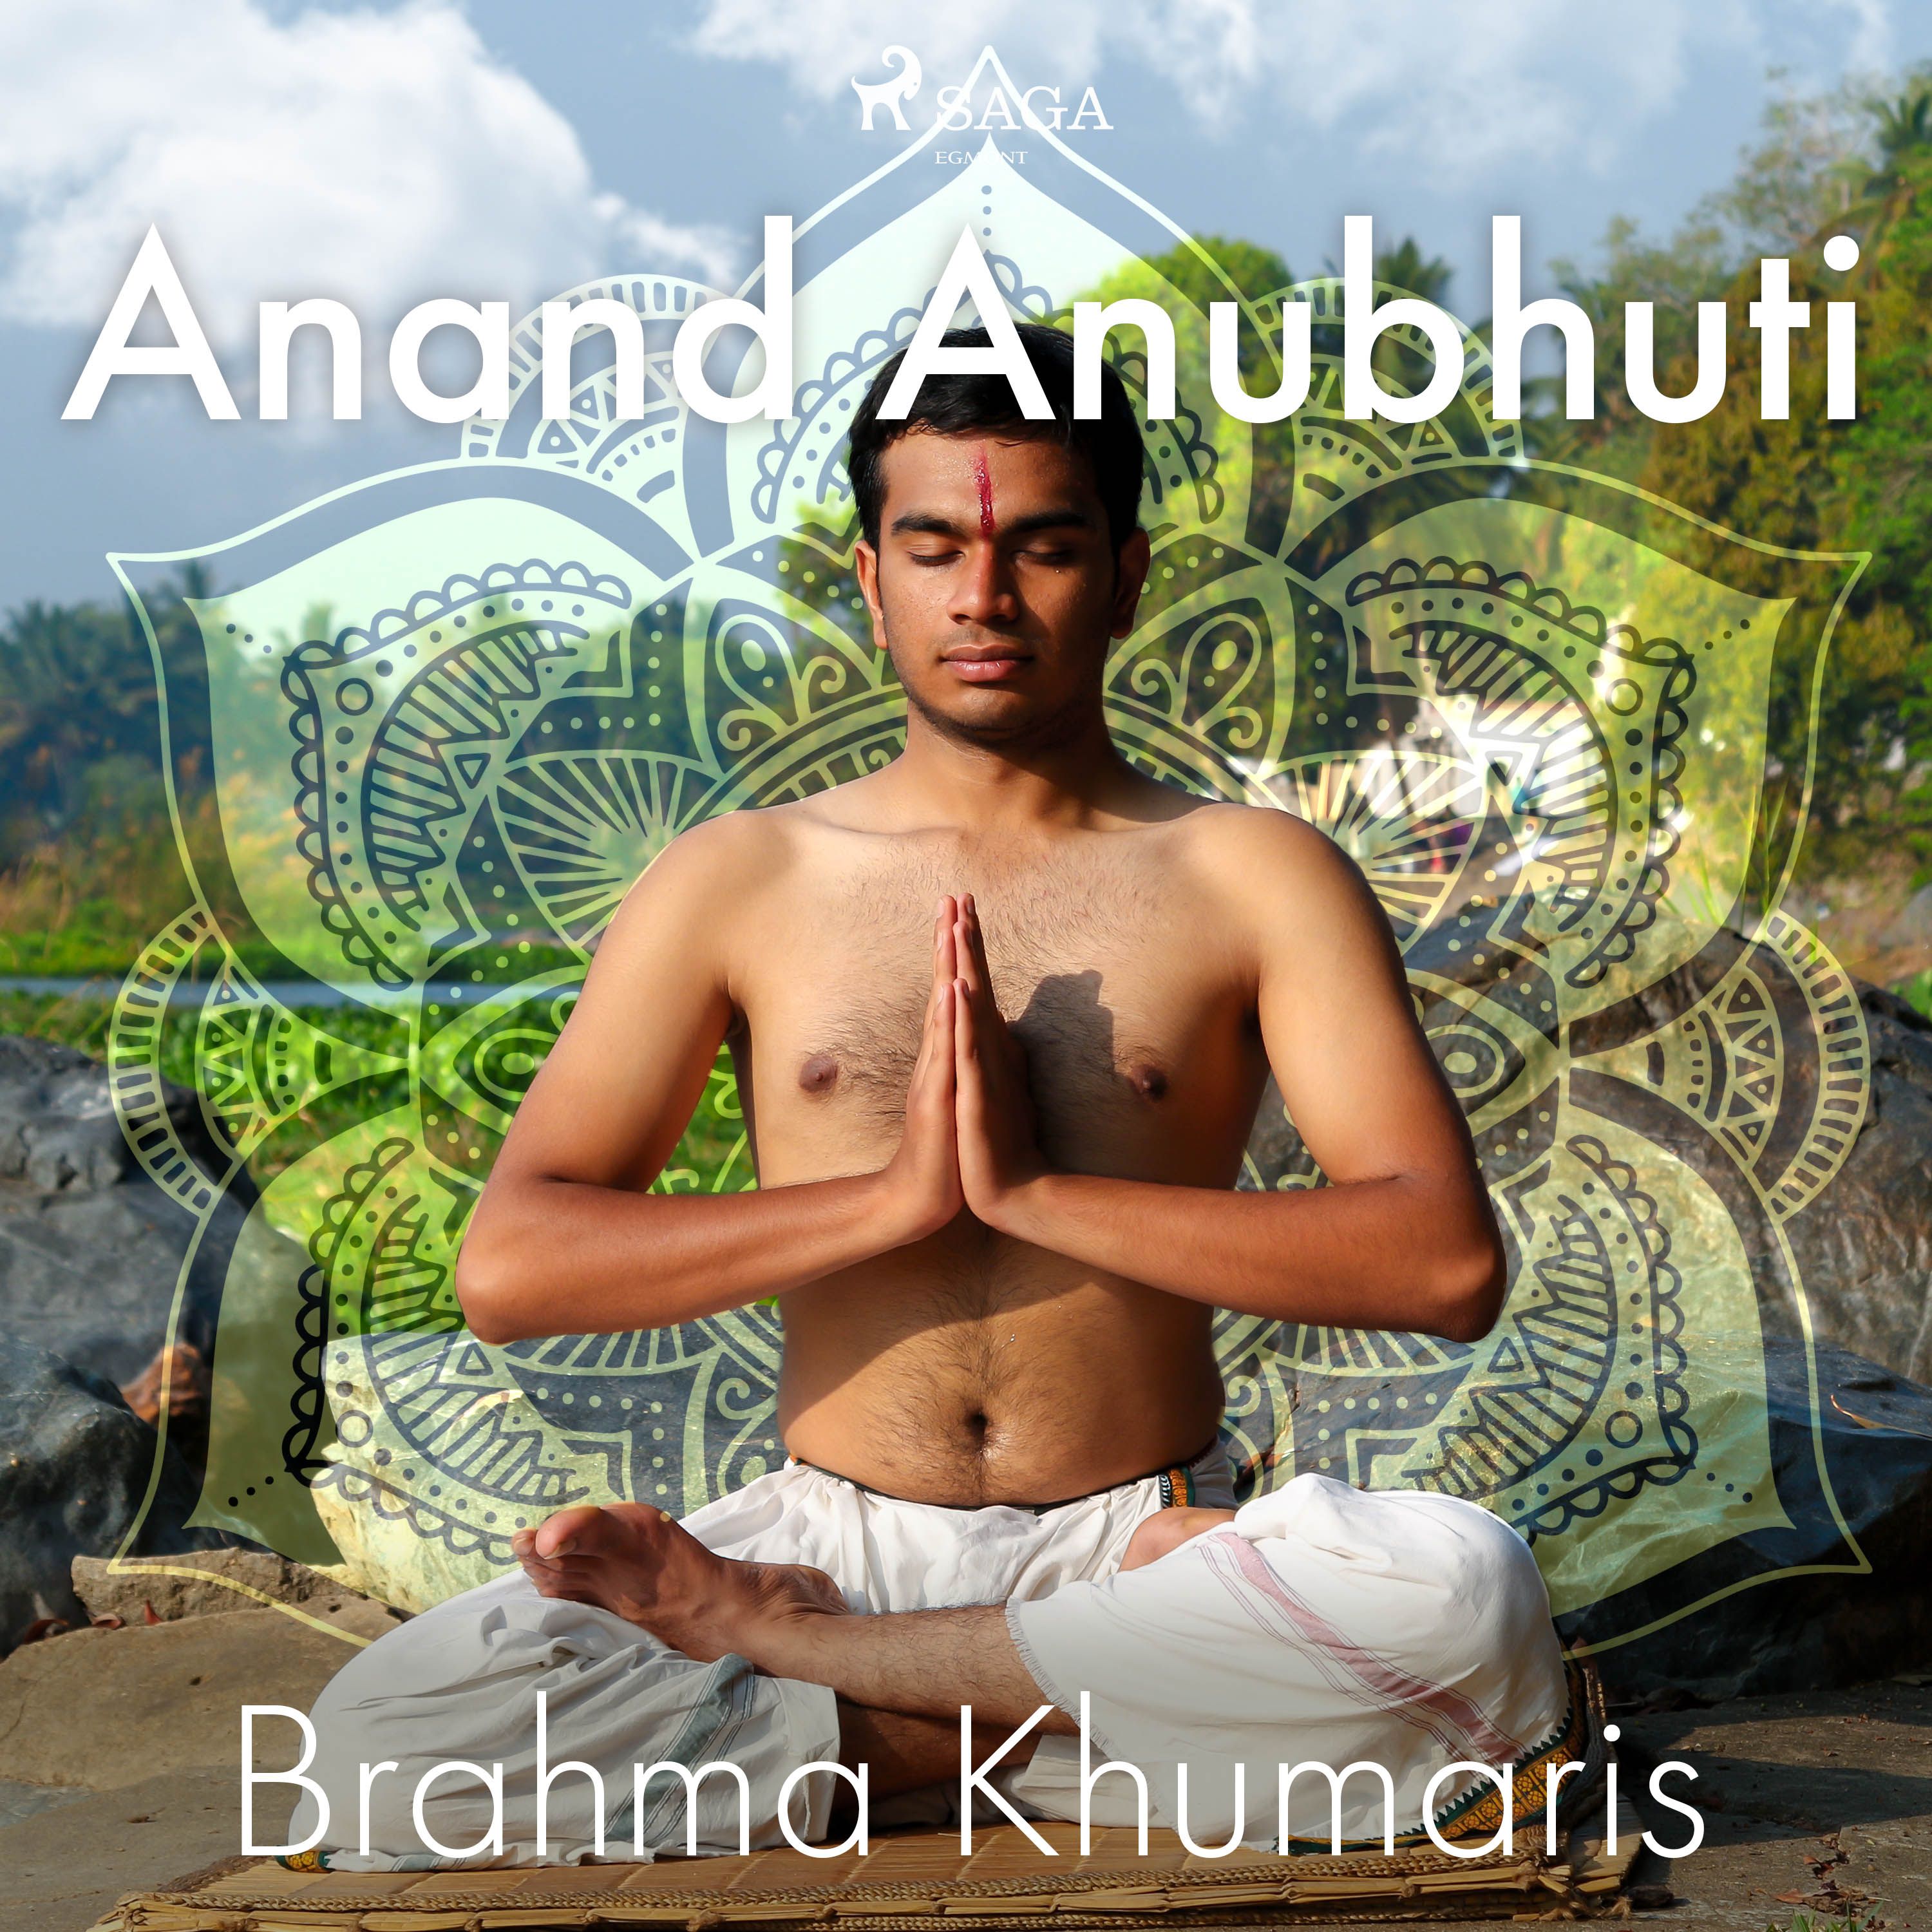 Anand Anubhuti, lydbog af Brahma Khumaris